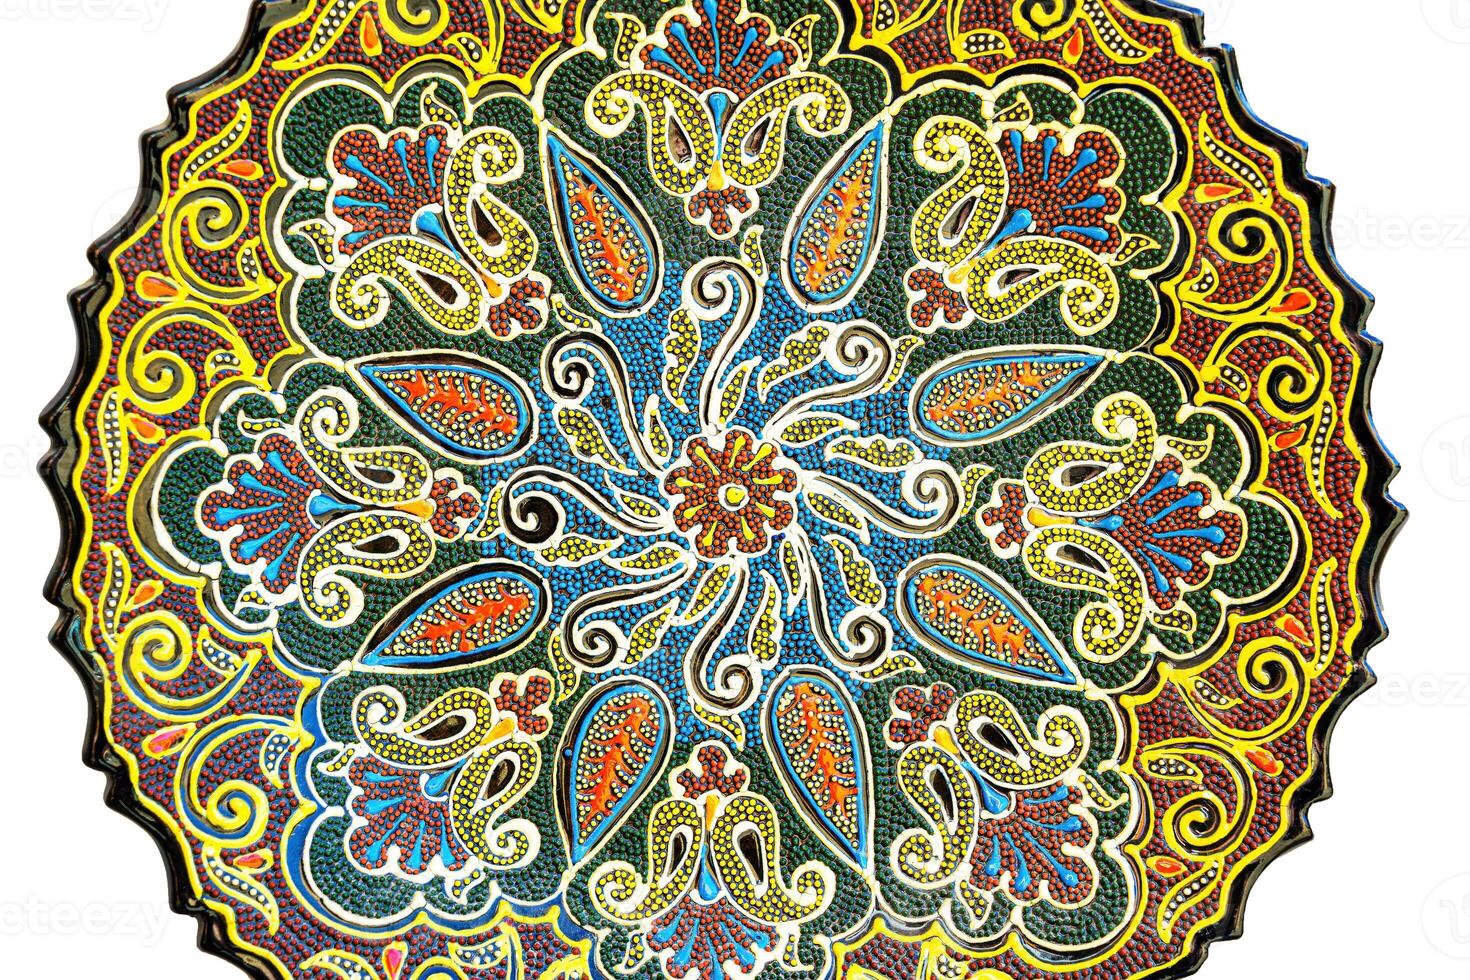 Arábica pintado cerámico platos resumen antecedentes. foto